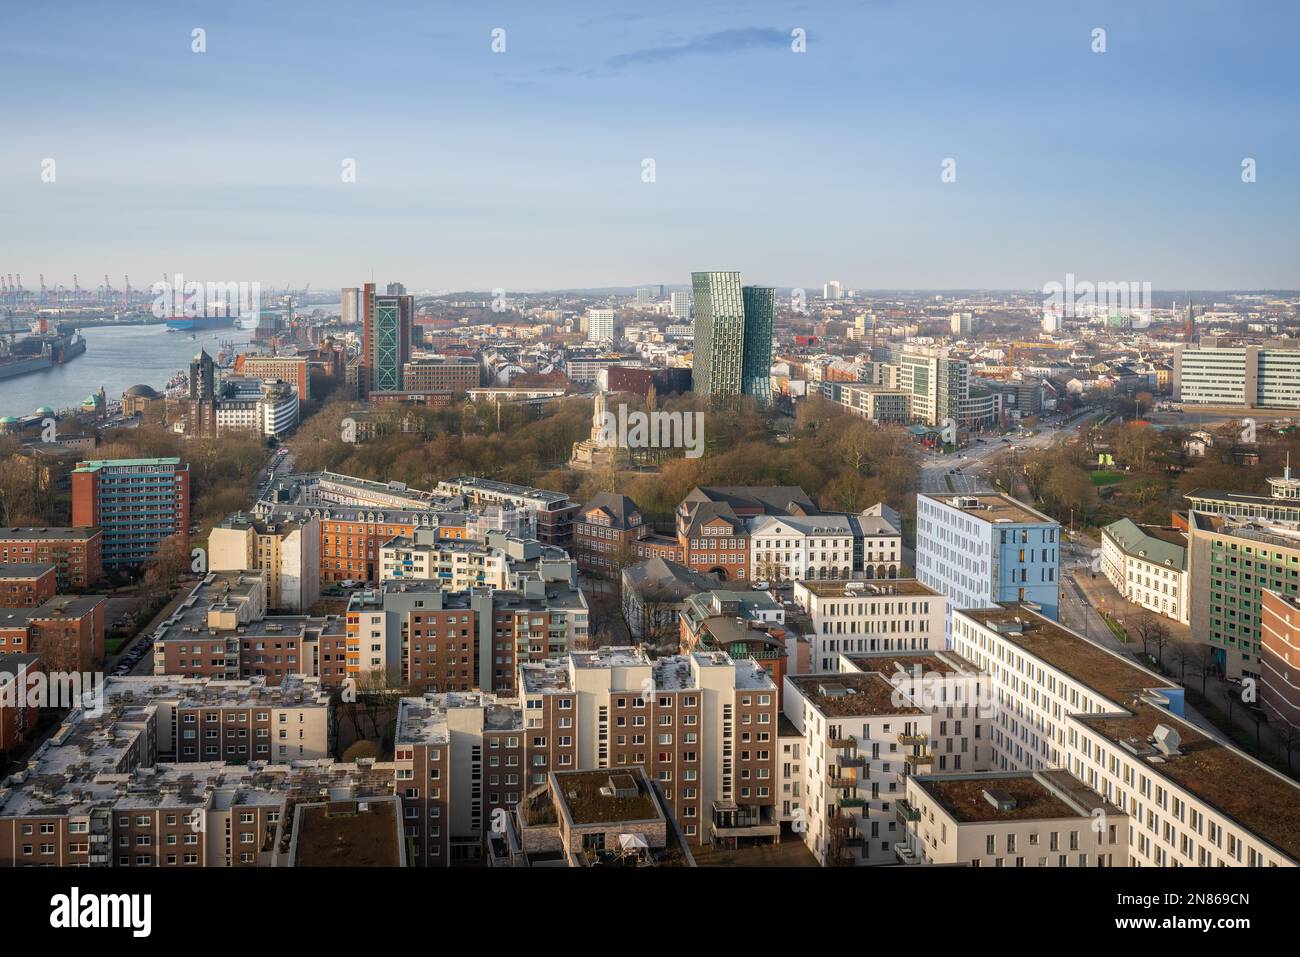 Aerial view of Hamburg with St. Pauli district - Hamburg, Germany Stock Photo